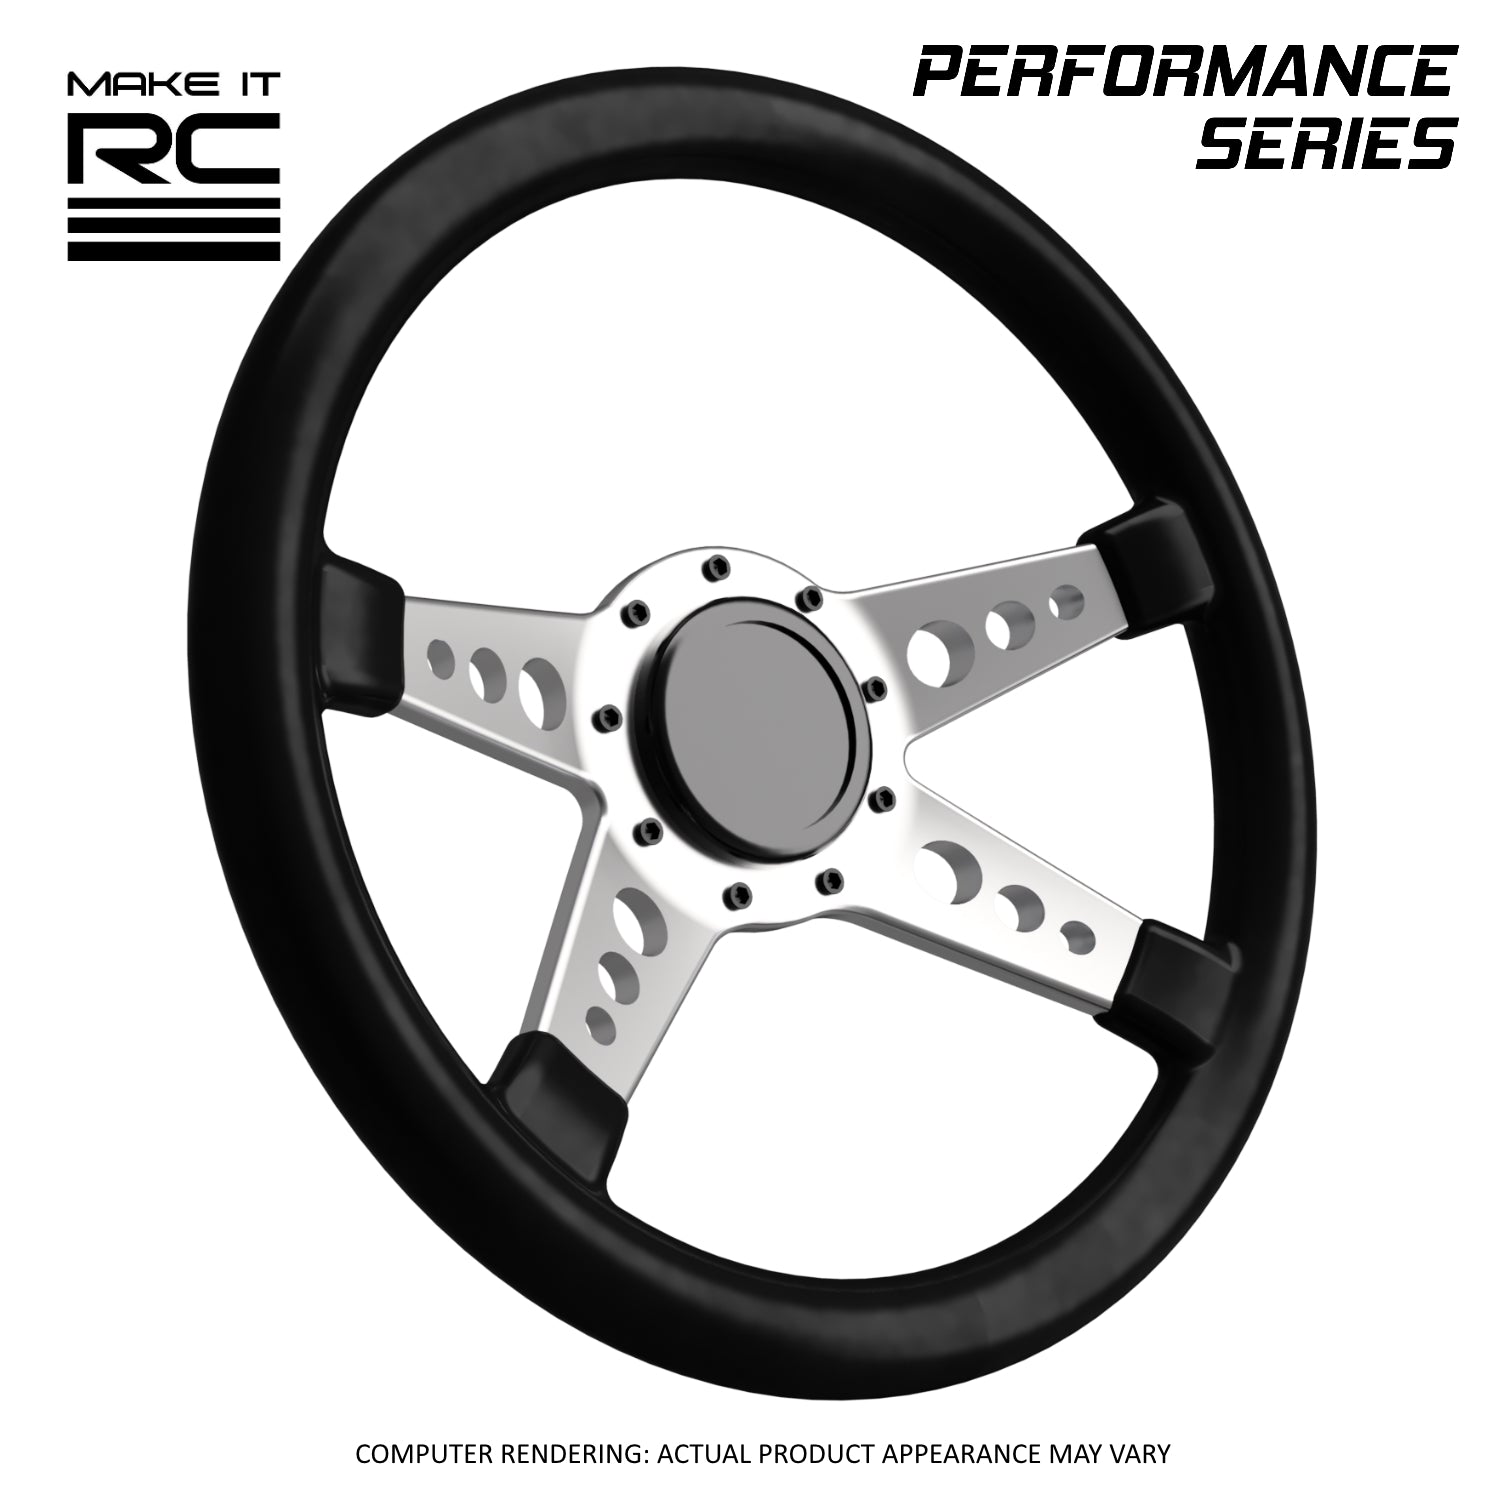 Make It RC Genesis GT1 Racing Steering Wheel for 1/10 RC Car and Truck